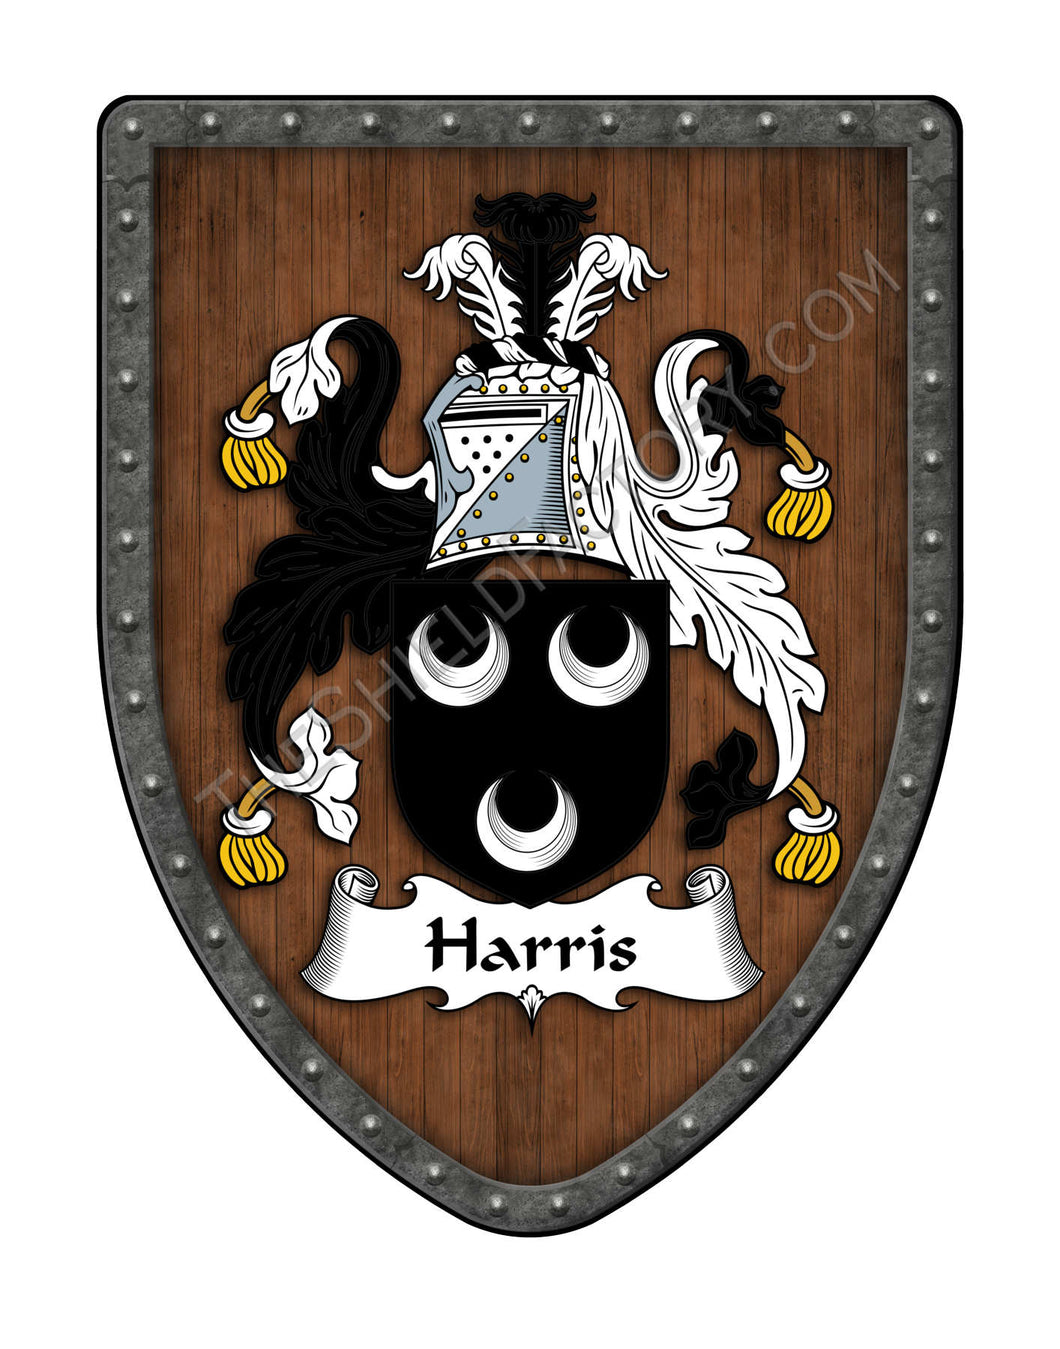 Harris I